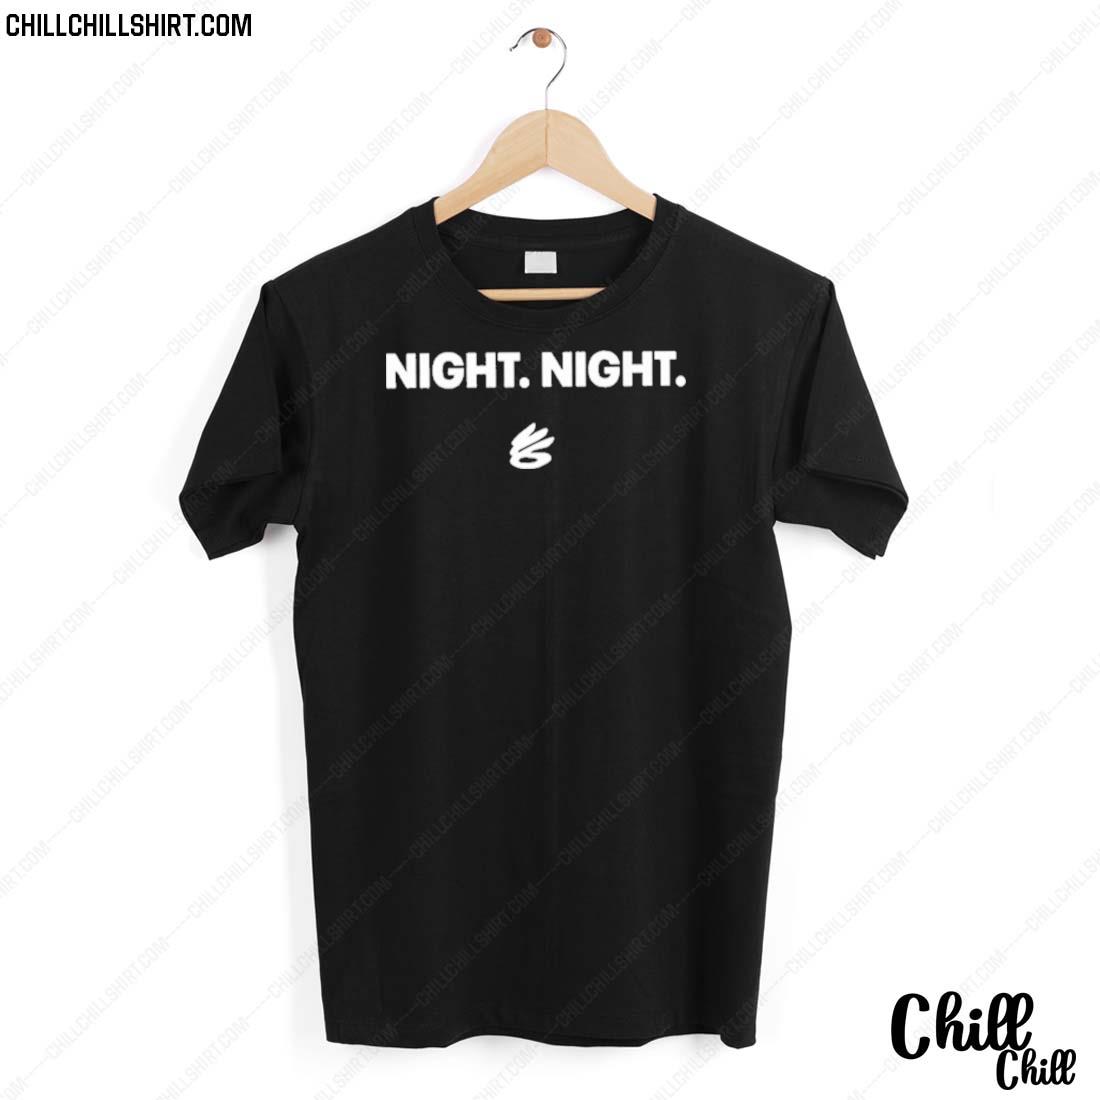 Nice steph Curry Night Night T-shirt